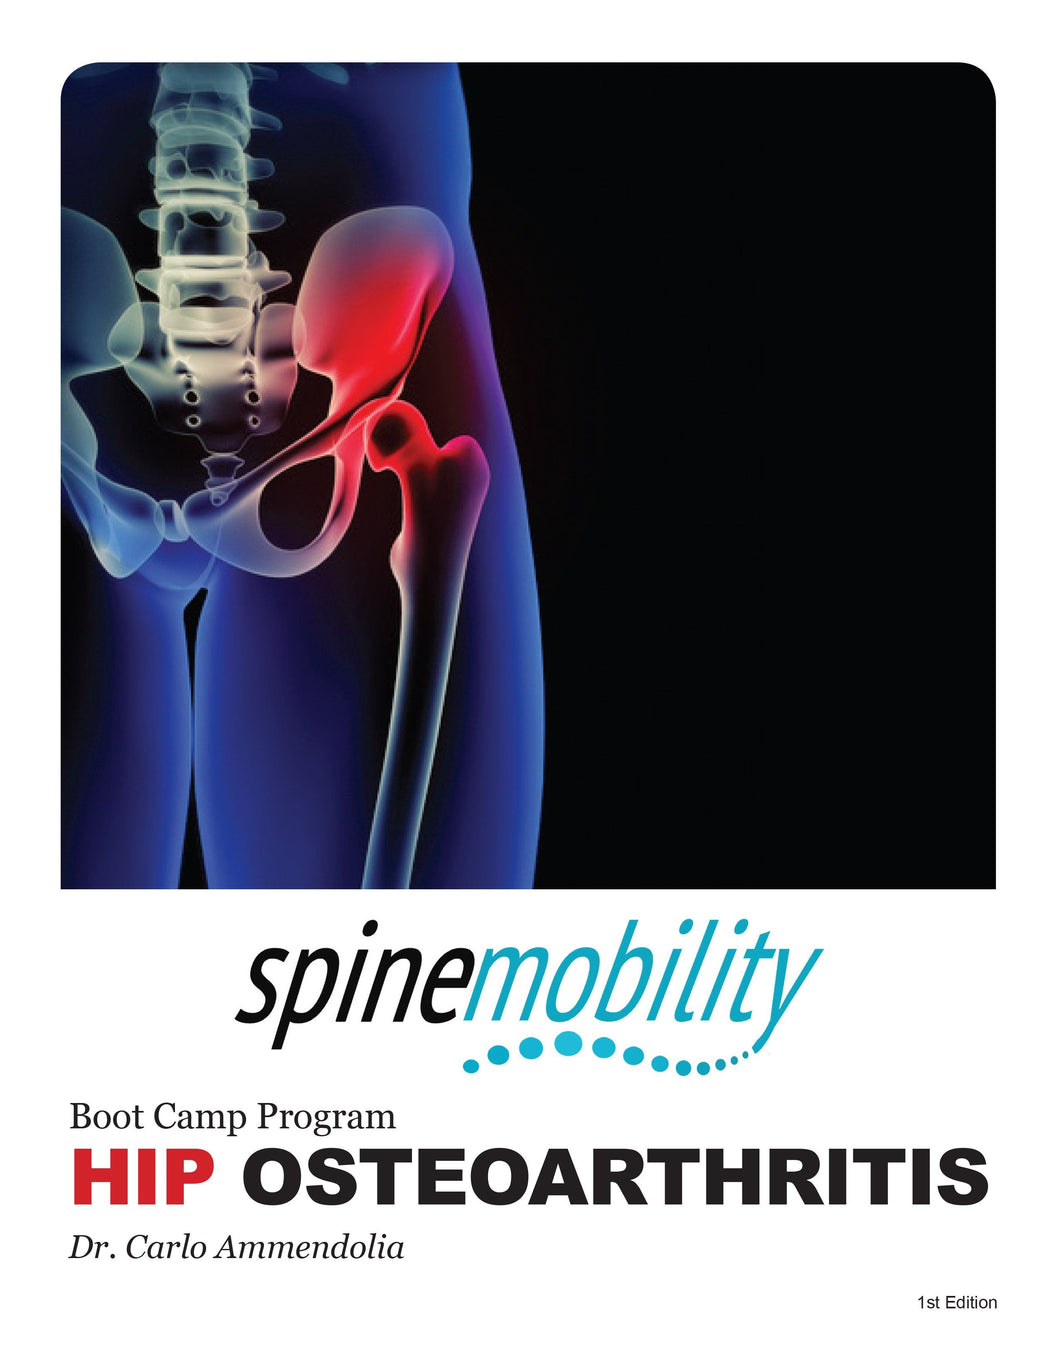 Hip Osteoarthritis Boot Camp Program Patient Workbook Bundle (Includes 5)